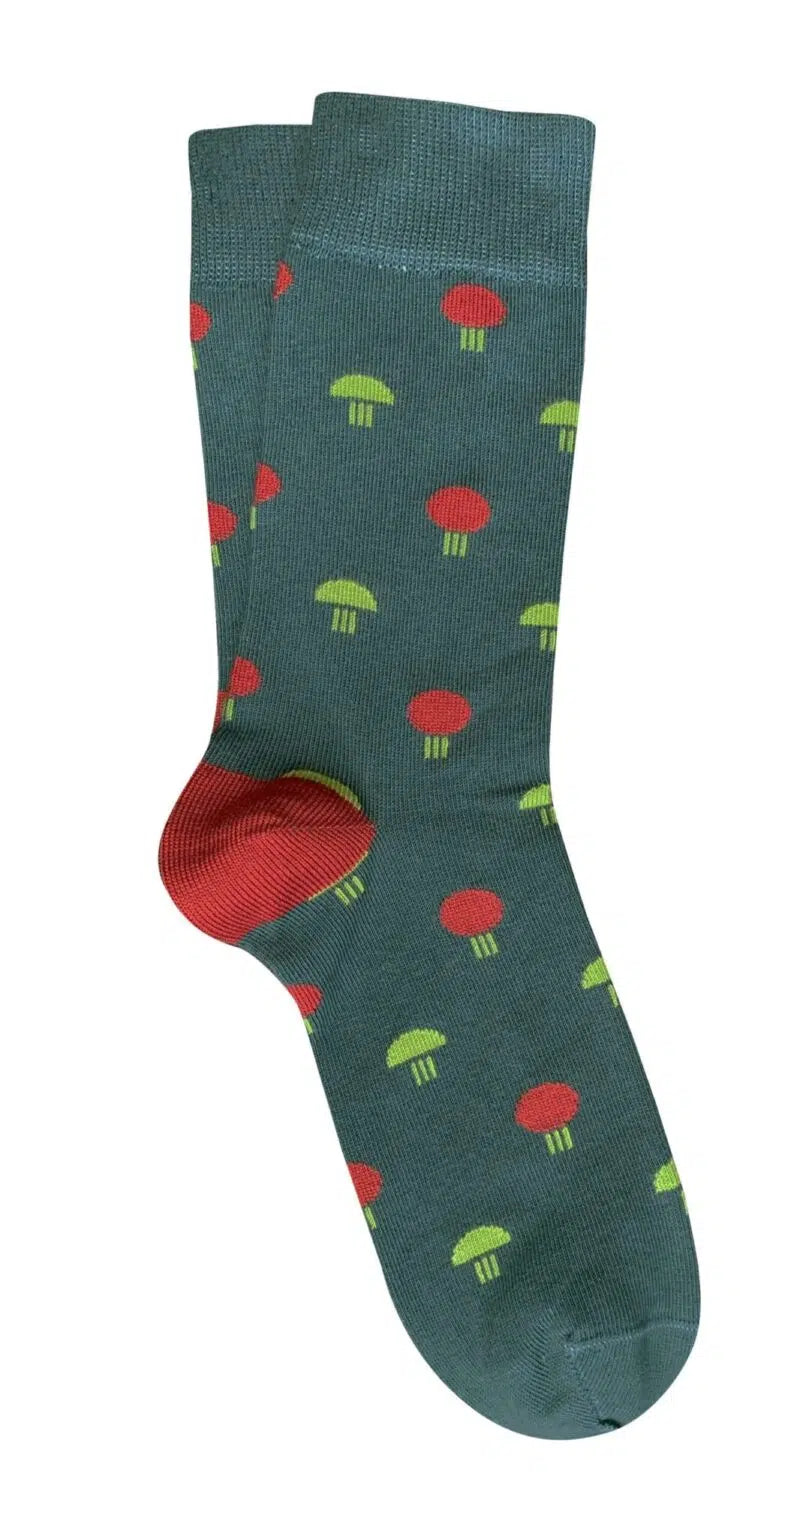 Tightology – Allegro Green Socks